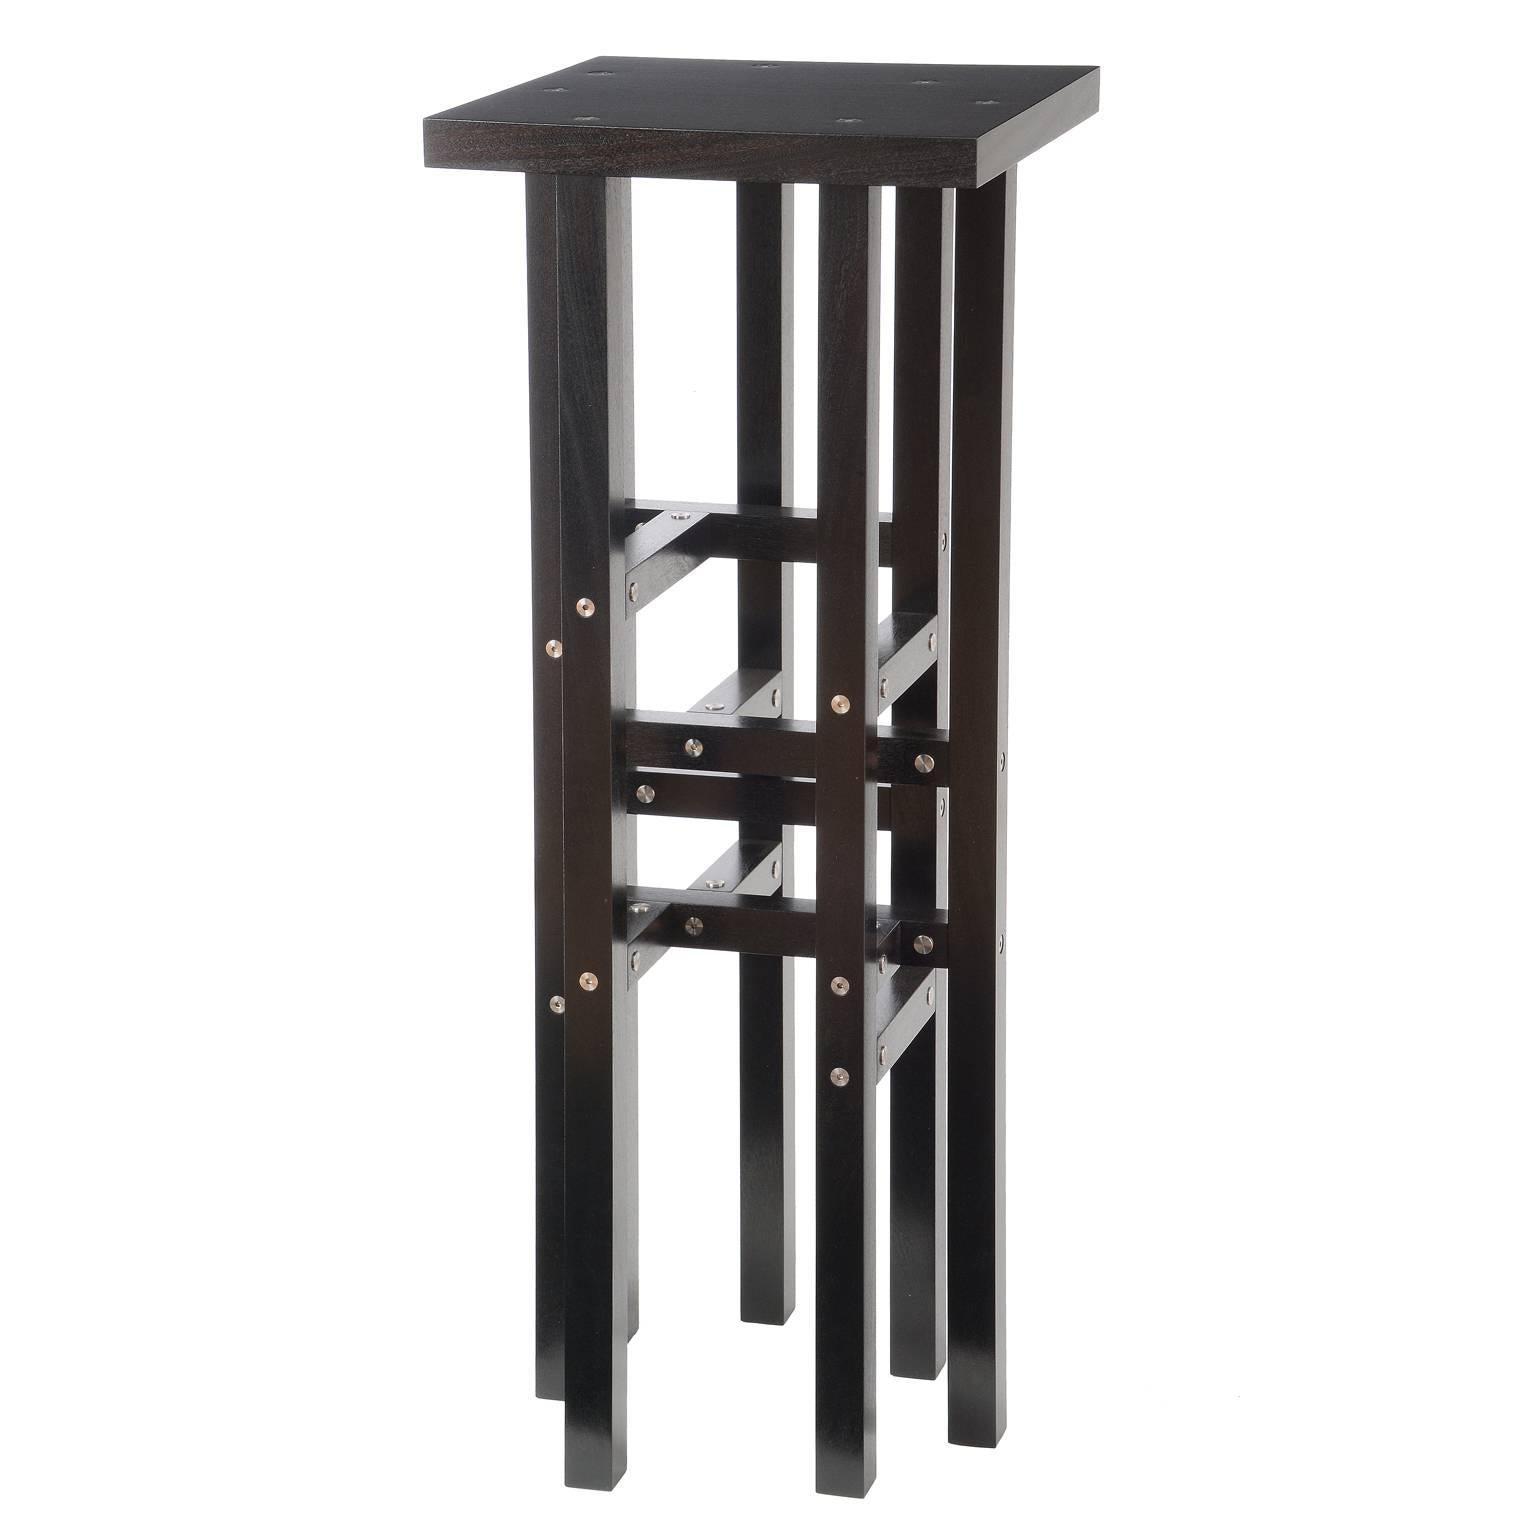 Modern Pedestal Table by Peter Harrison, Industrial Metal and Black Wood